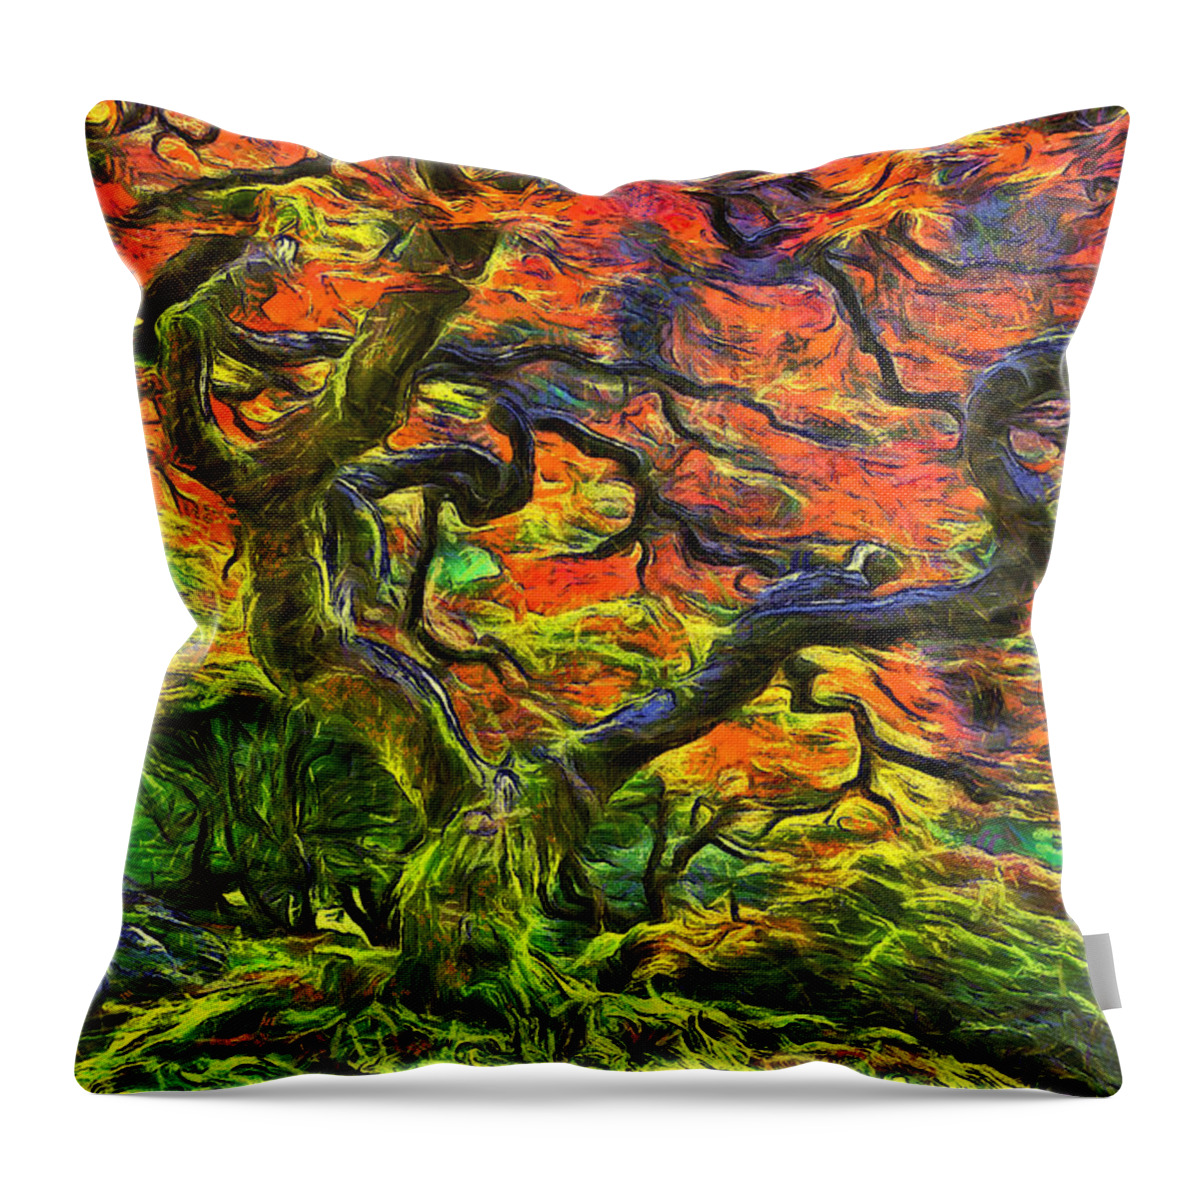 Digital Art Throw Pillow featuring the digital art Dragon Tree by Mark Kiver